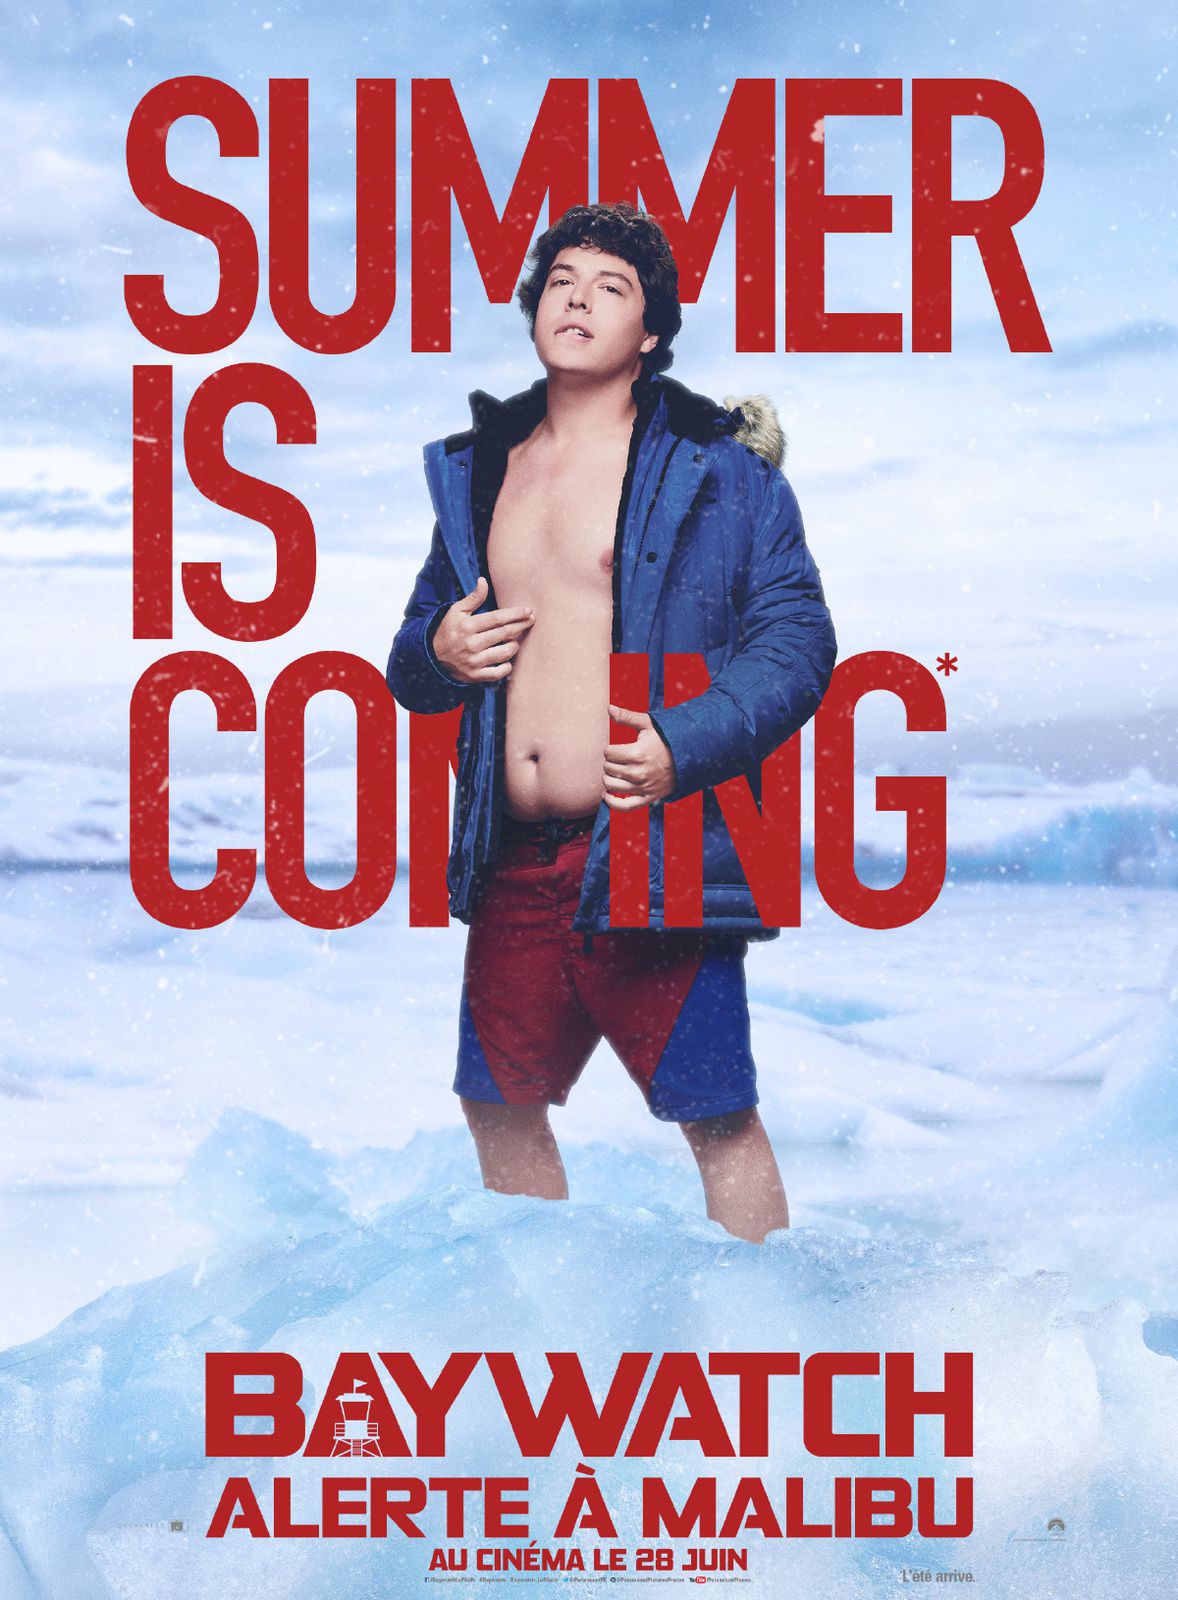 BAYWATCH : ALERTE À MALIBU - Summer is coming avec Dwayne Johnson, Zac Efron - Au cinéma le 21 juin 2017